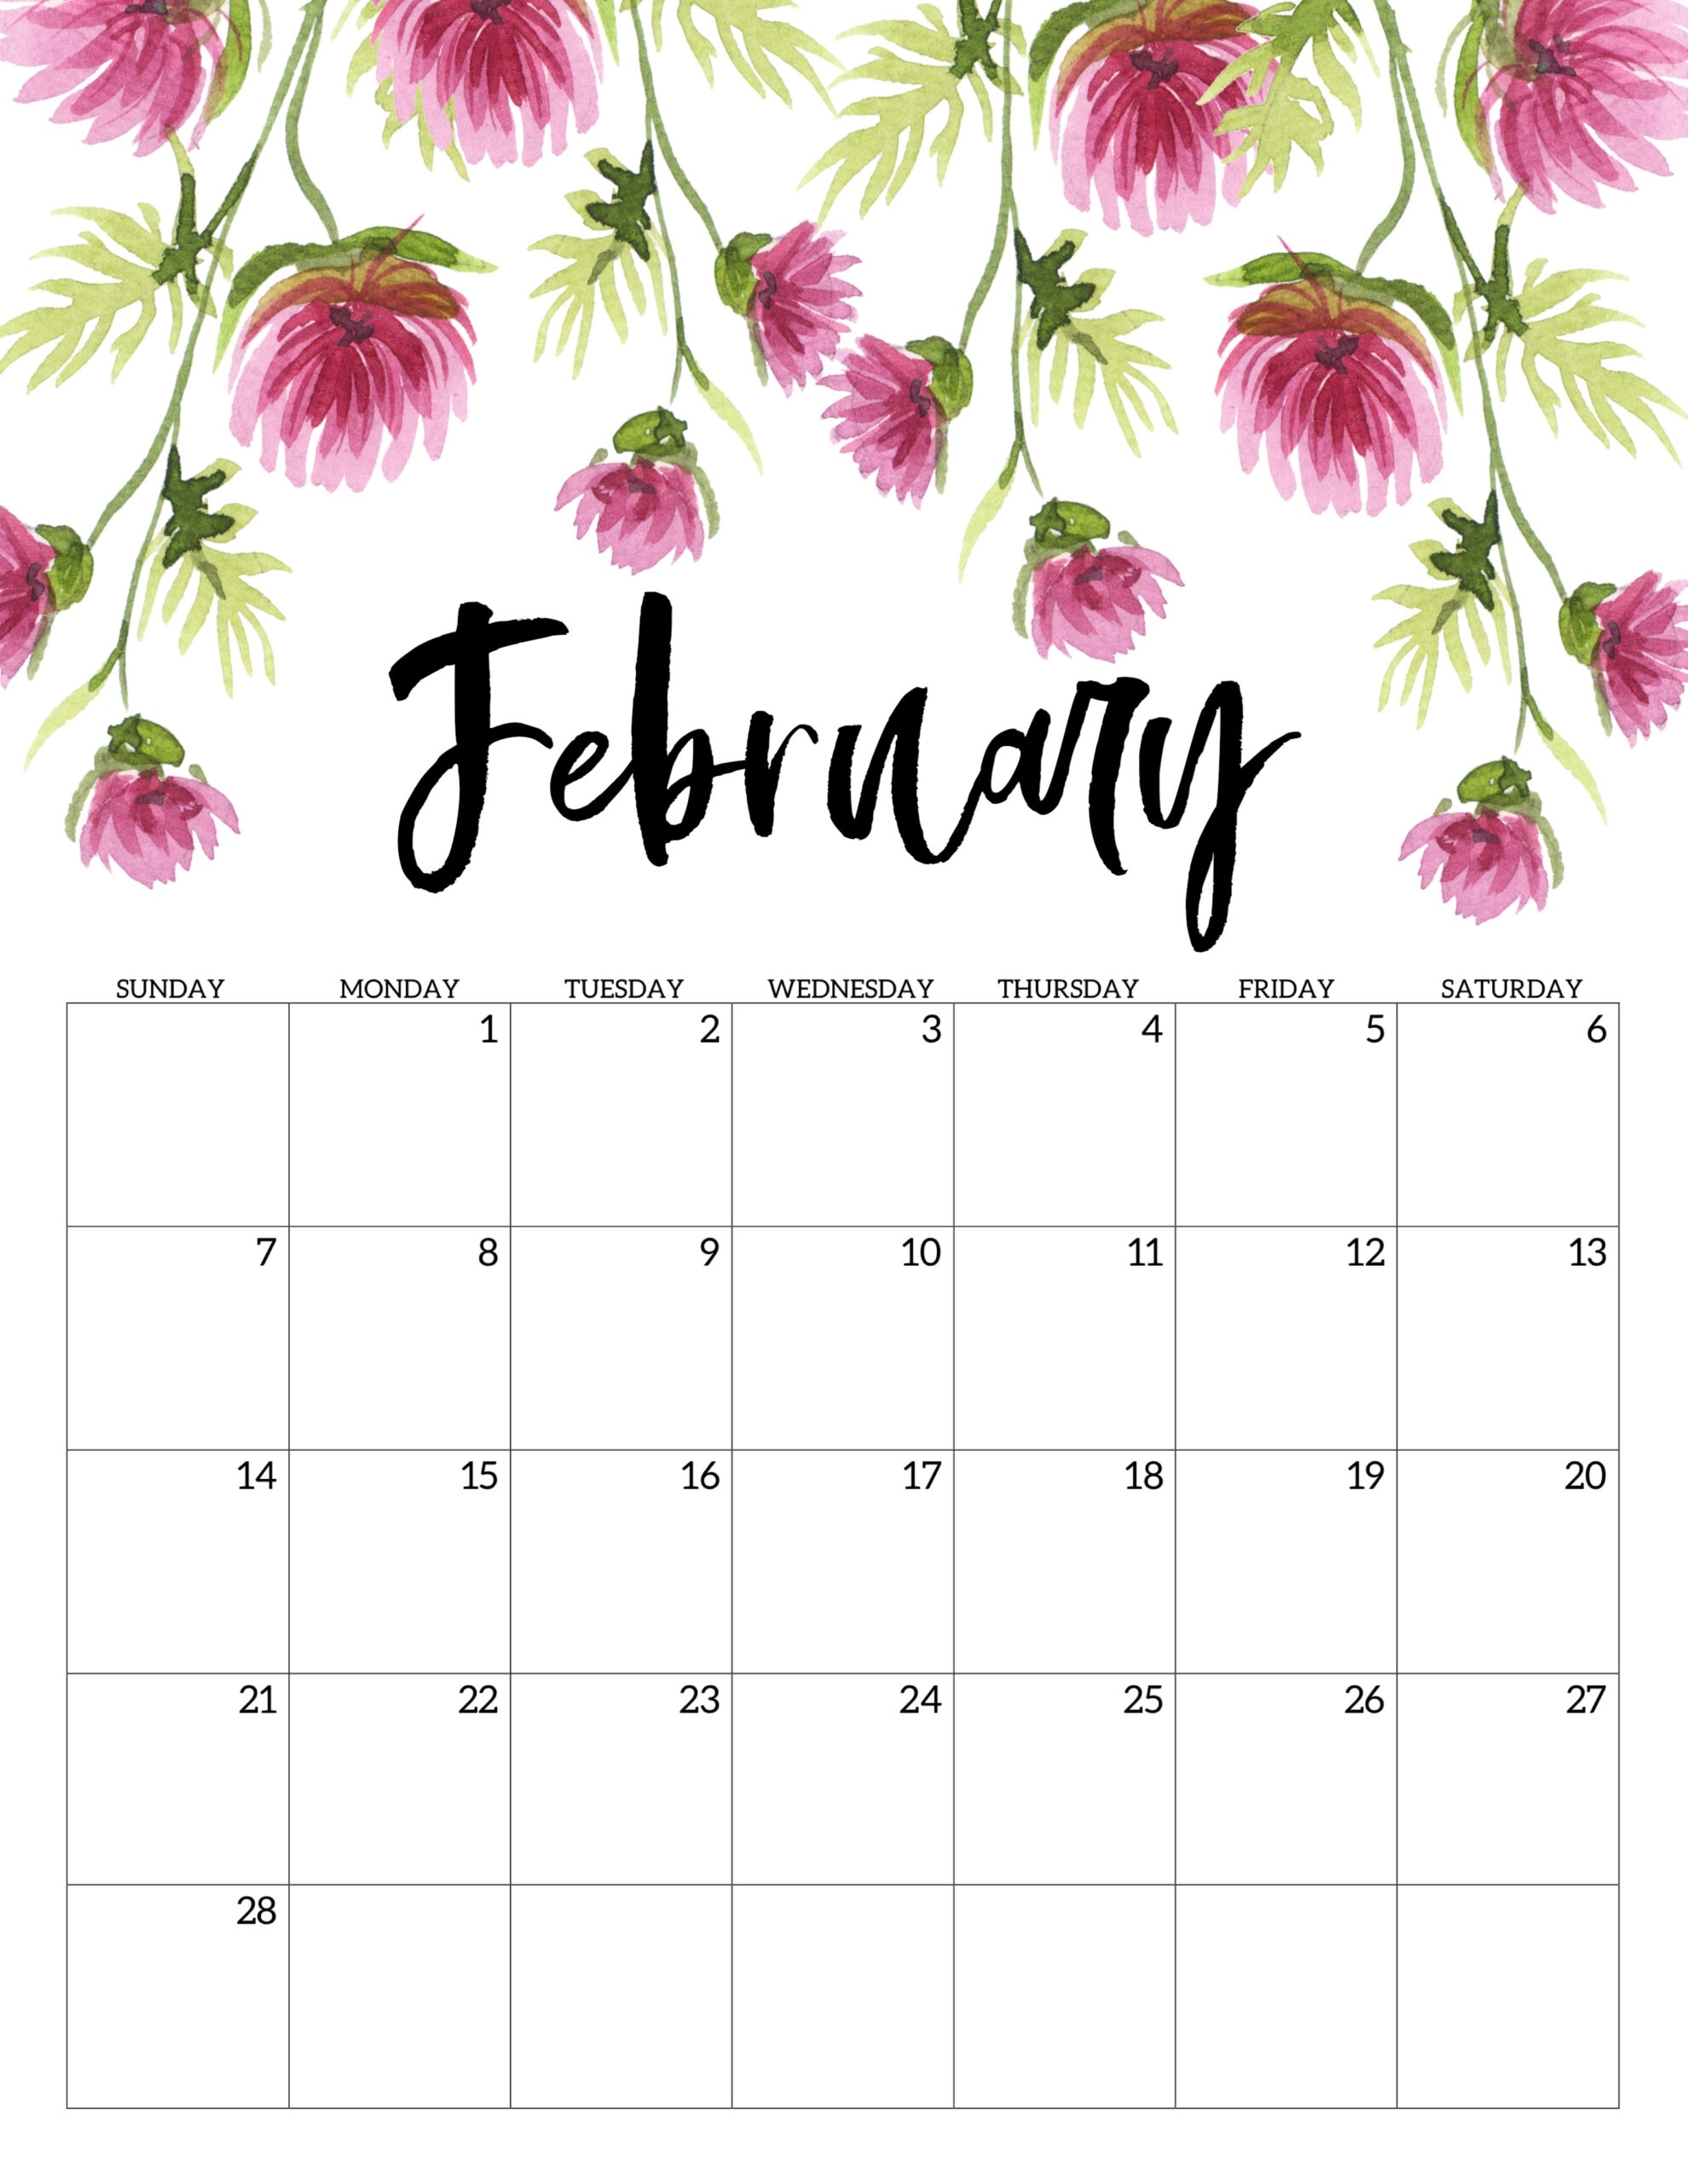 30 Free February 2021 Calendars For Home Or Office - Onedesblog 2021 Calendar Cute